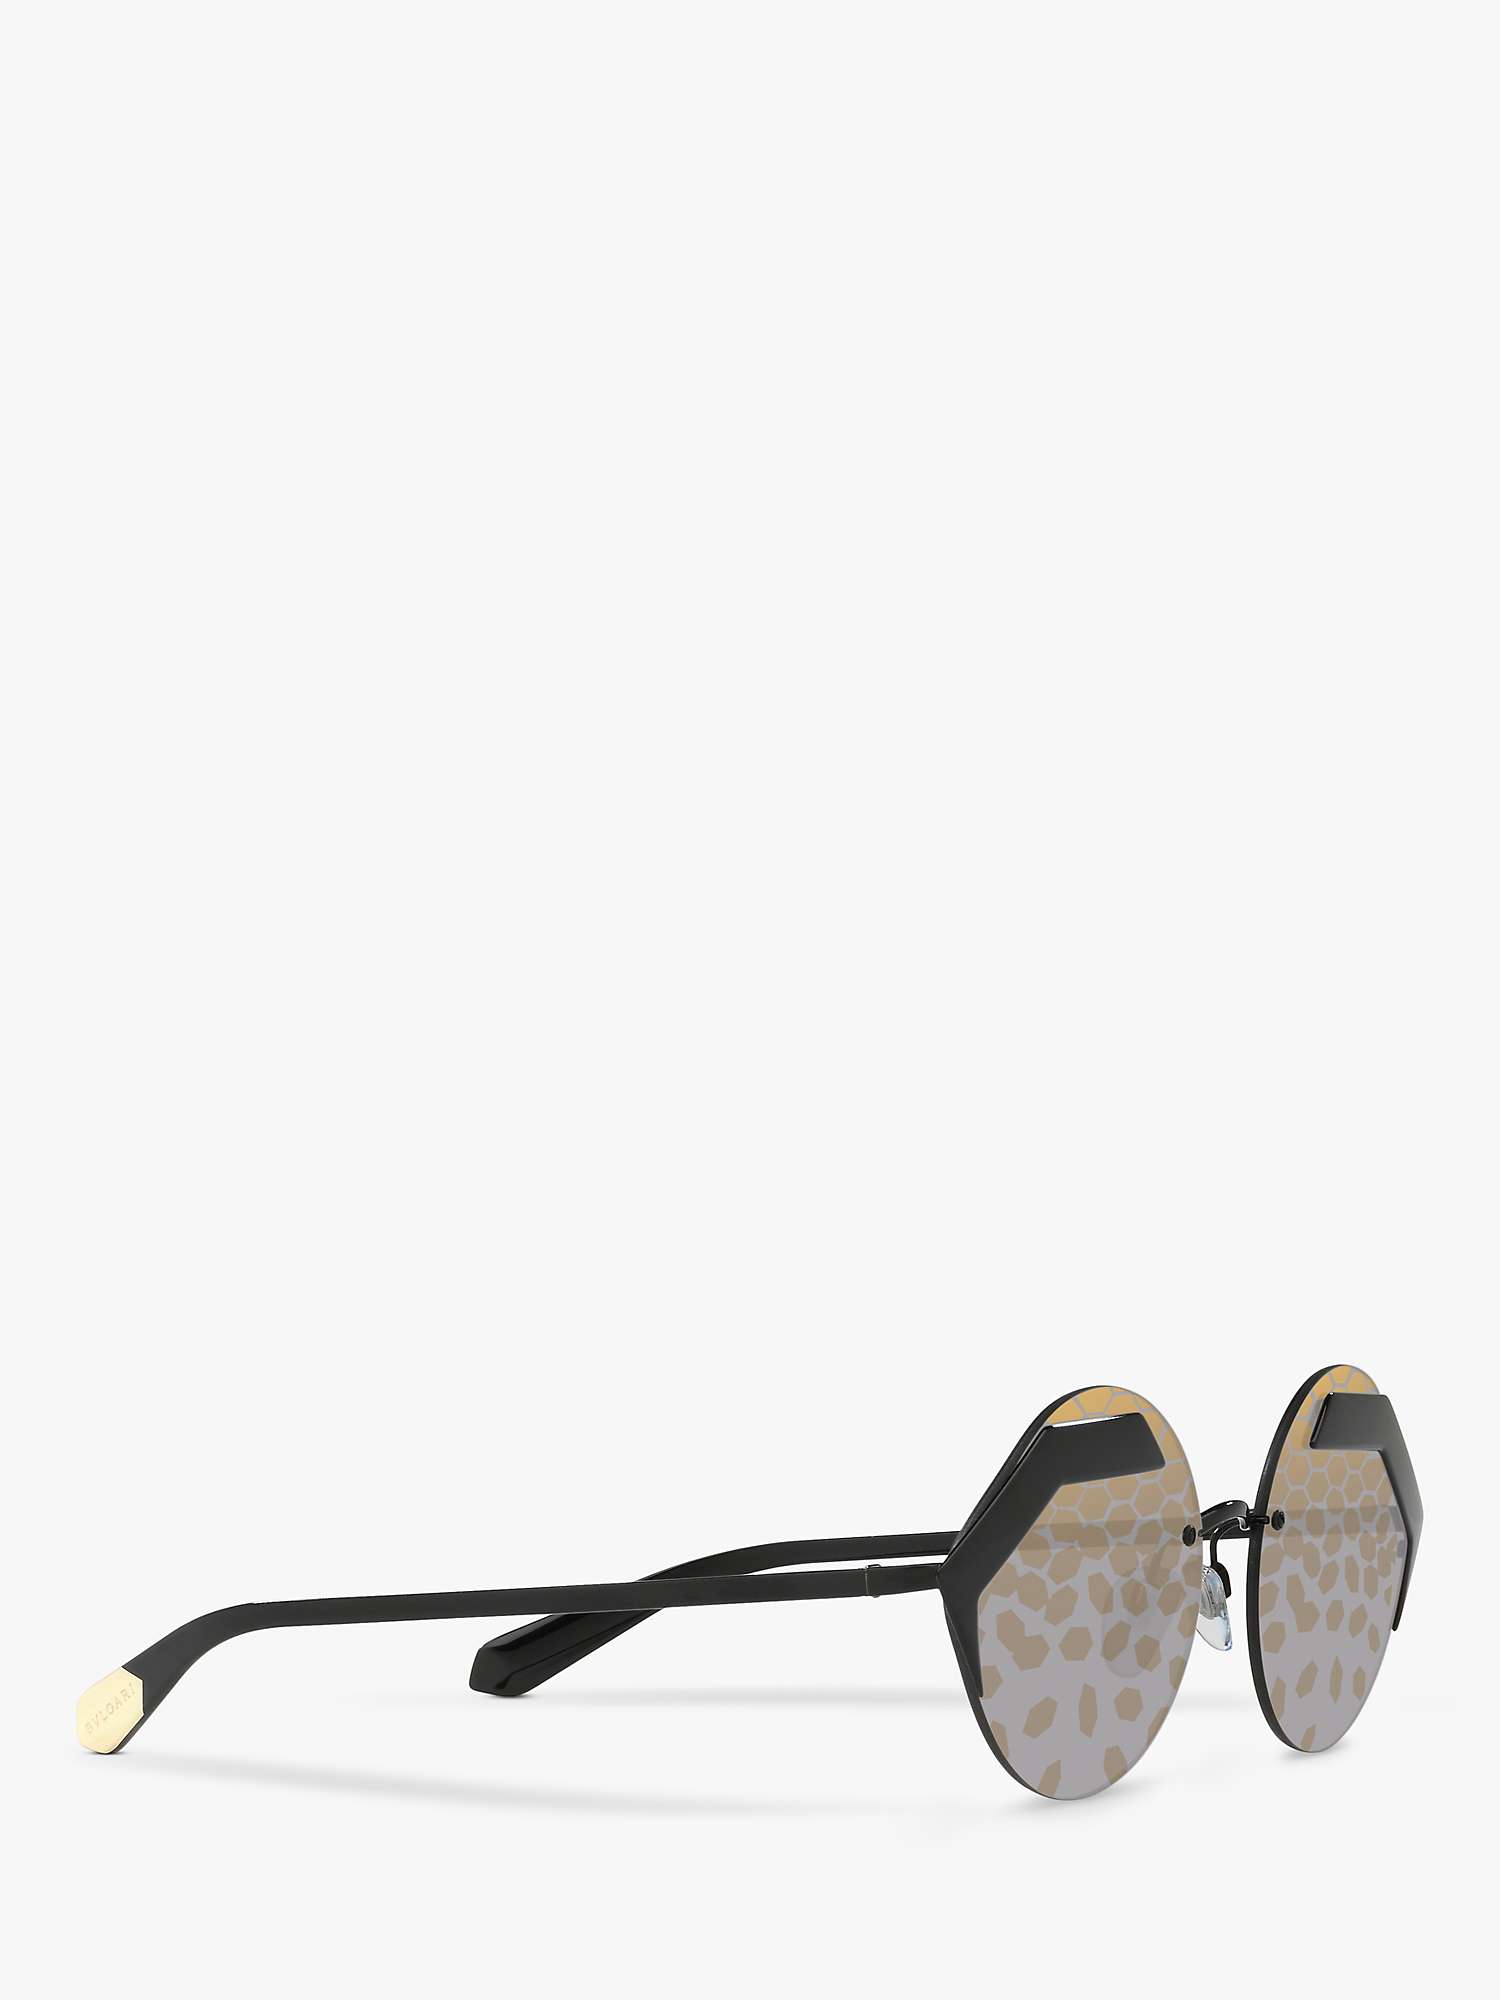 Buy BVLGARI BV6089 Round Sunglasses, Black/Silver Multi Online at johnlewis.com